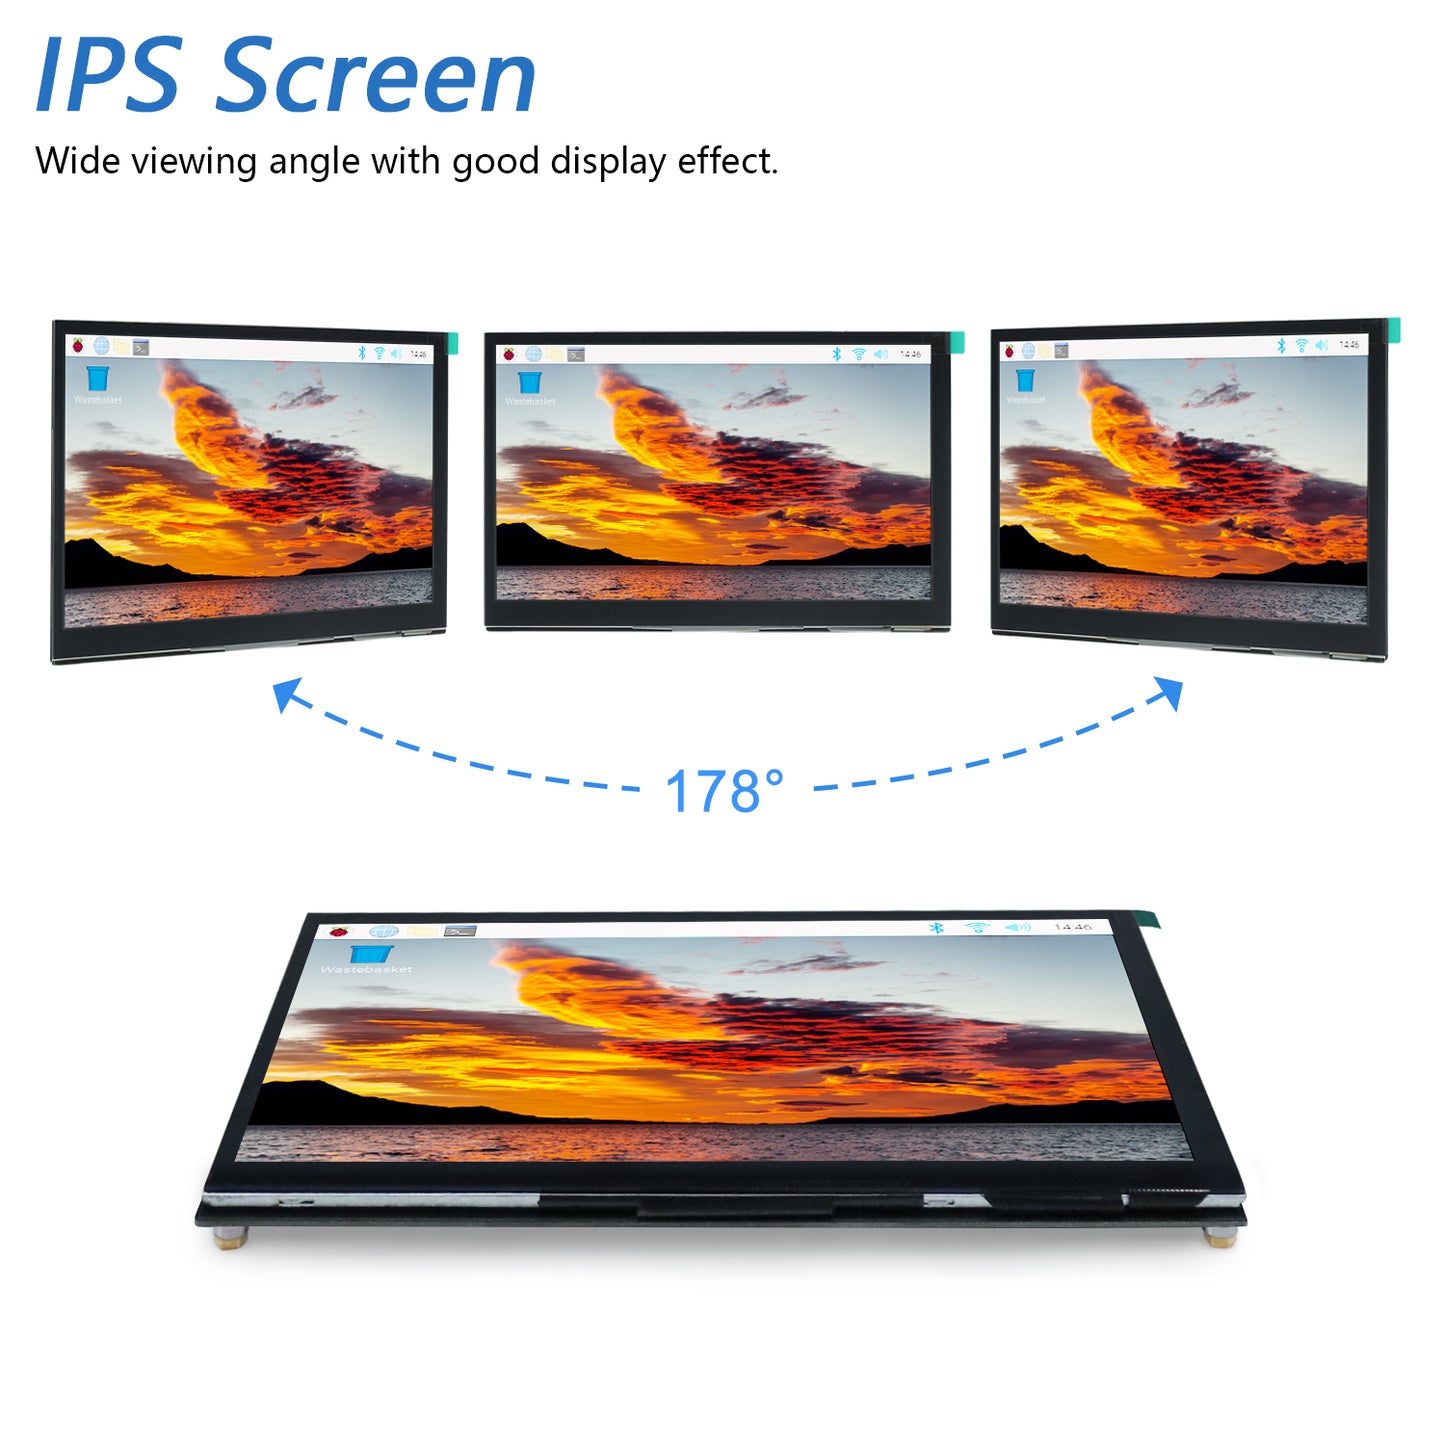 Freenove Touchscreen Monitor for Raspberry Pi (HDMI 7 Inch IPS)